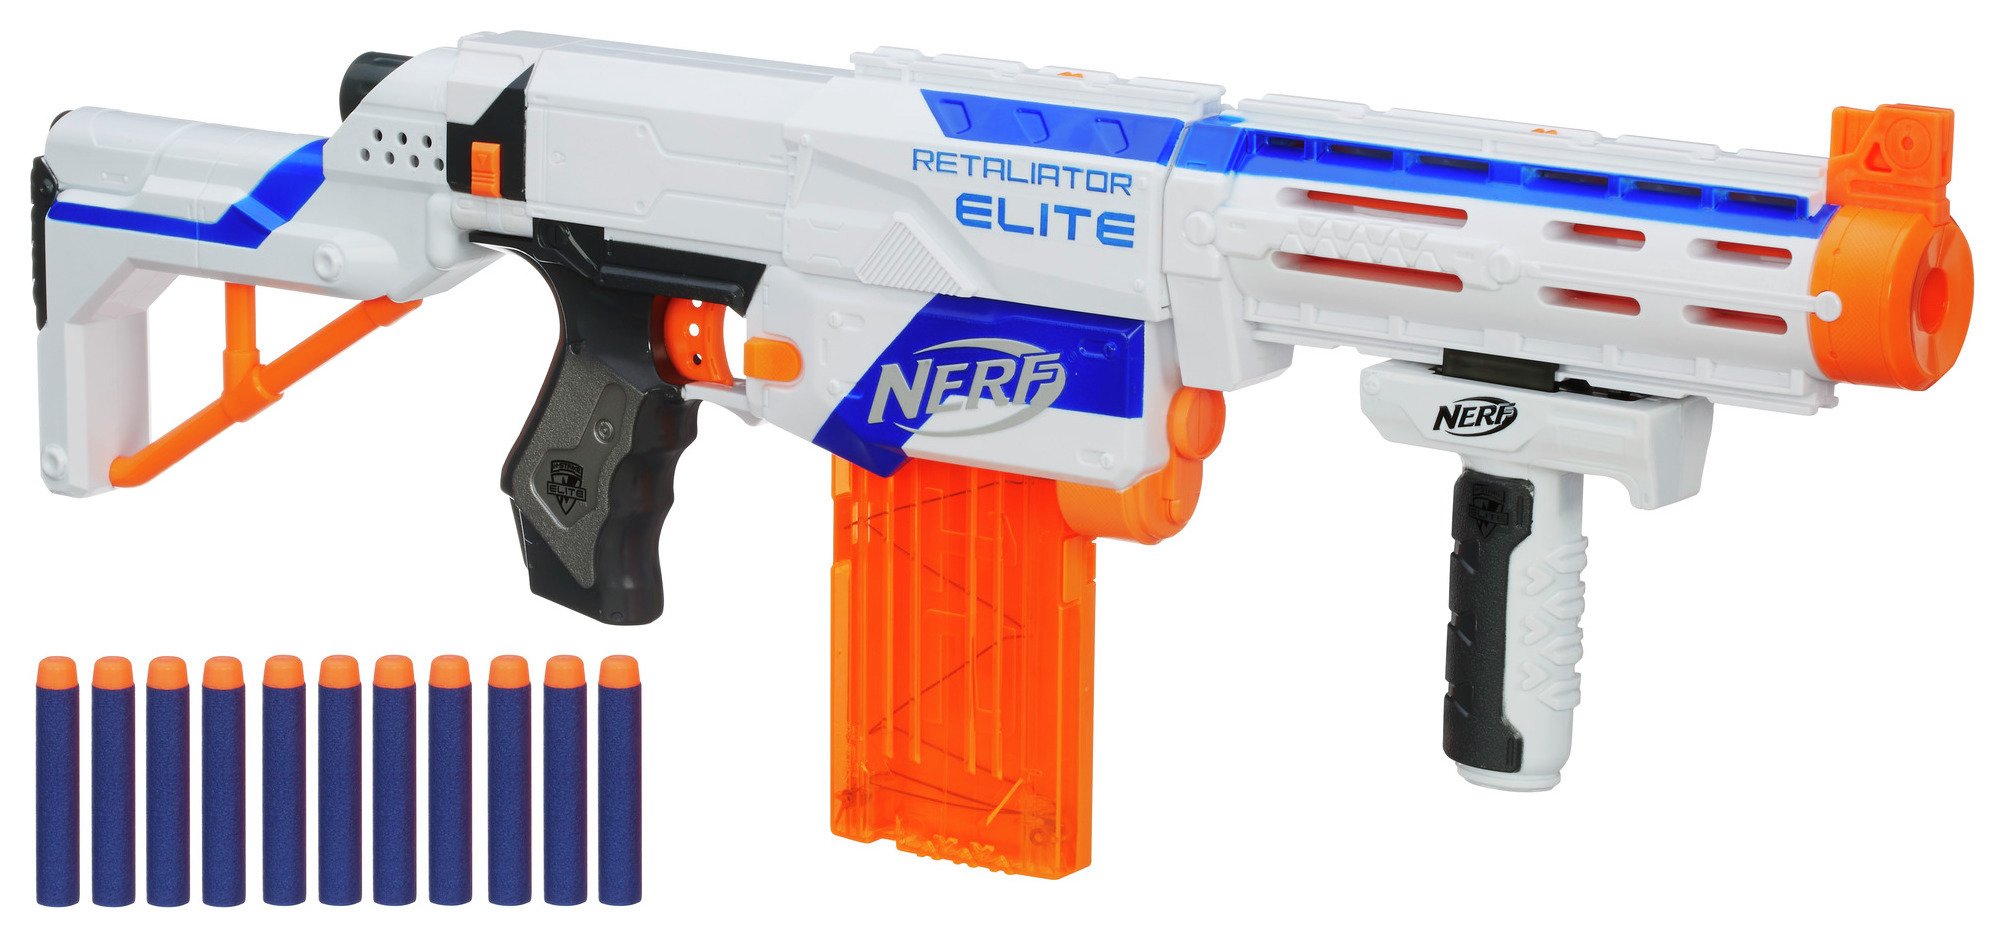 Nerf N-Strike Elite Retaliator Blaster